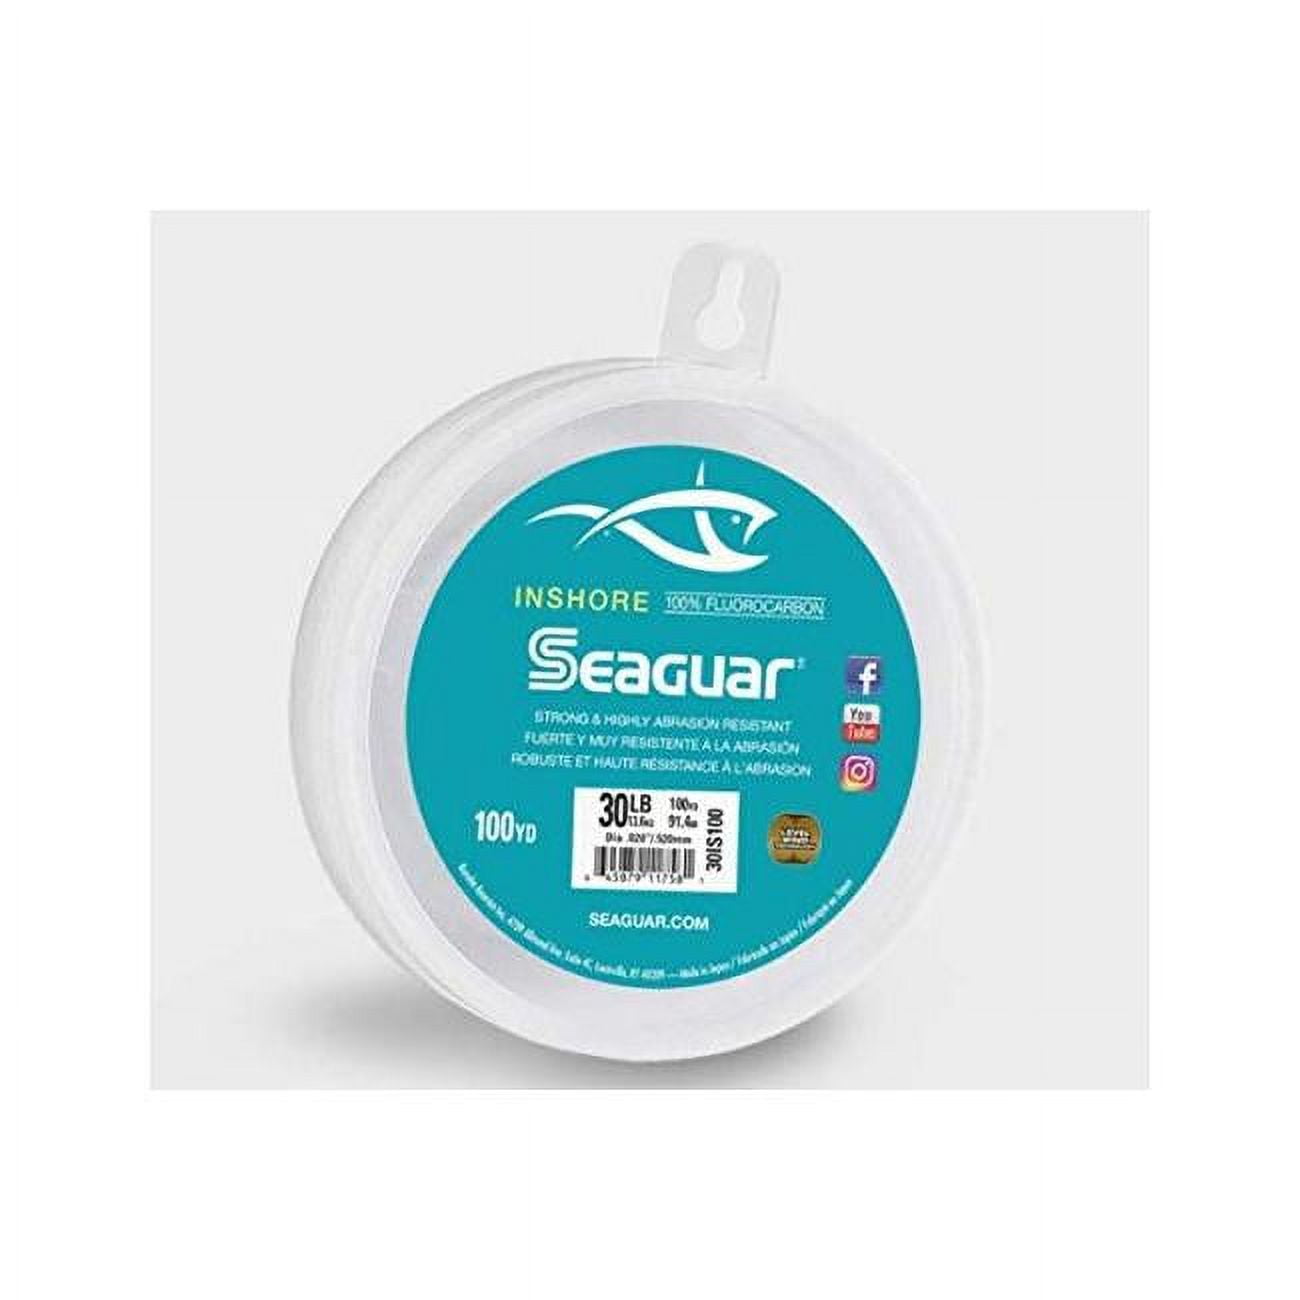 Seaguar InShore 100% Fluorocarbon Fishing Line 30lbs, 100yds Break  Strength/Length - 30IS100 